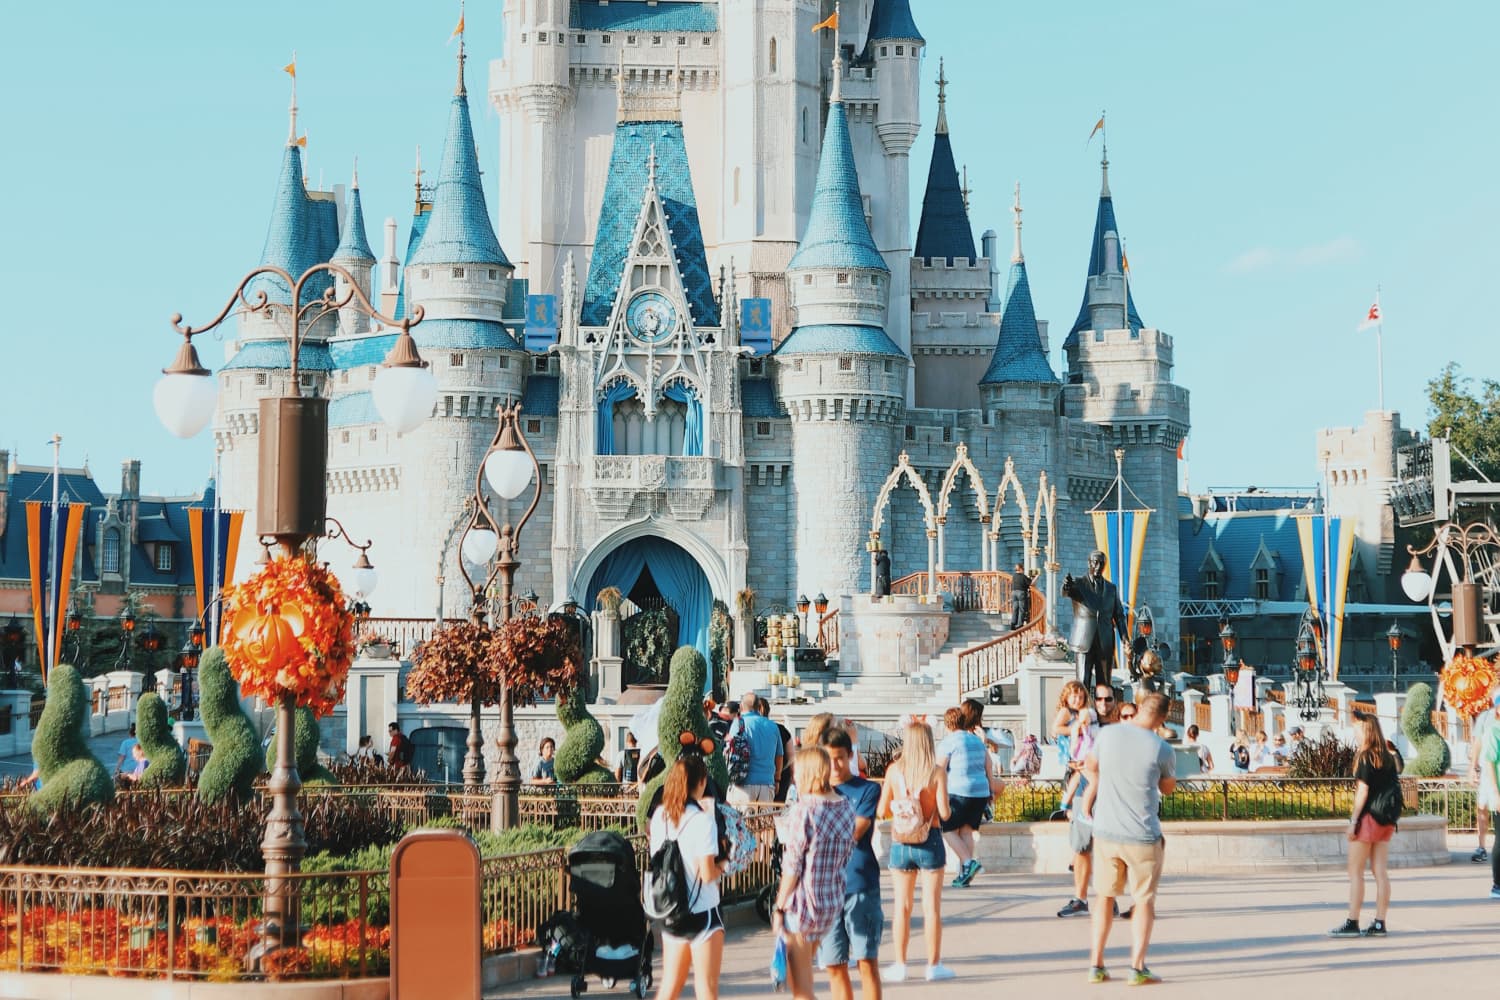 Take a Peek Inside Disney World’s Whimsical Cinderella